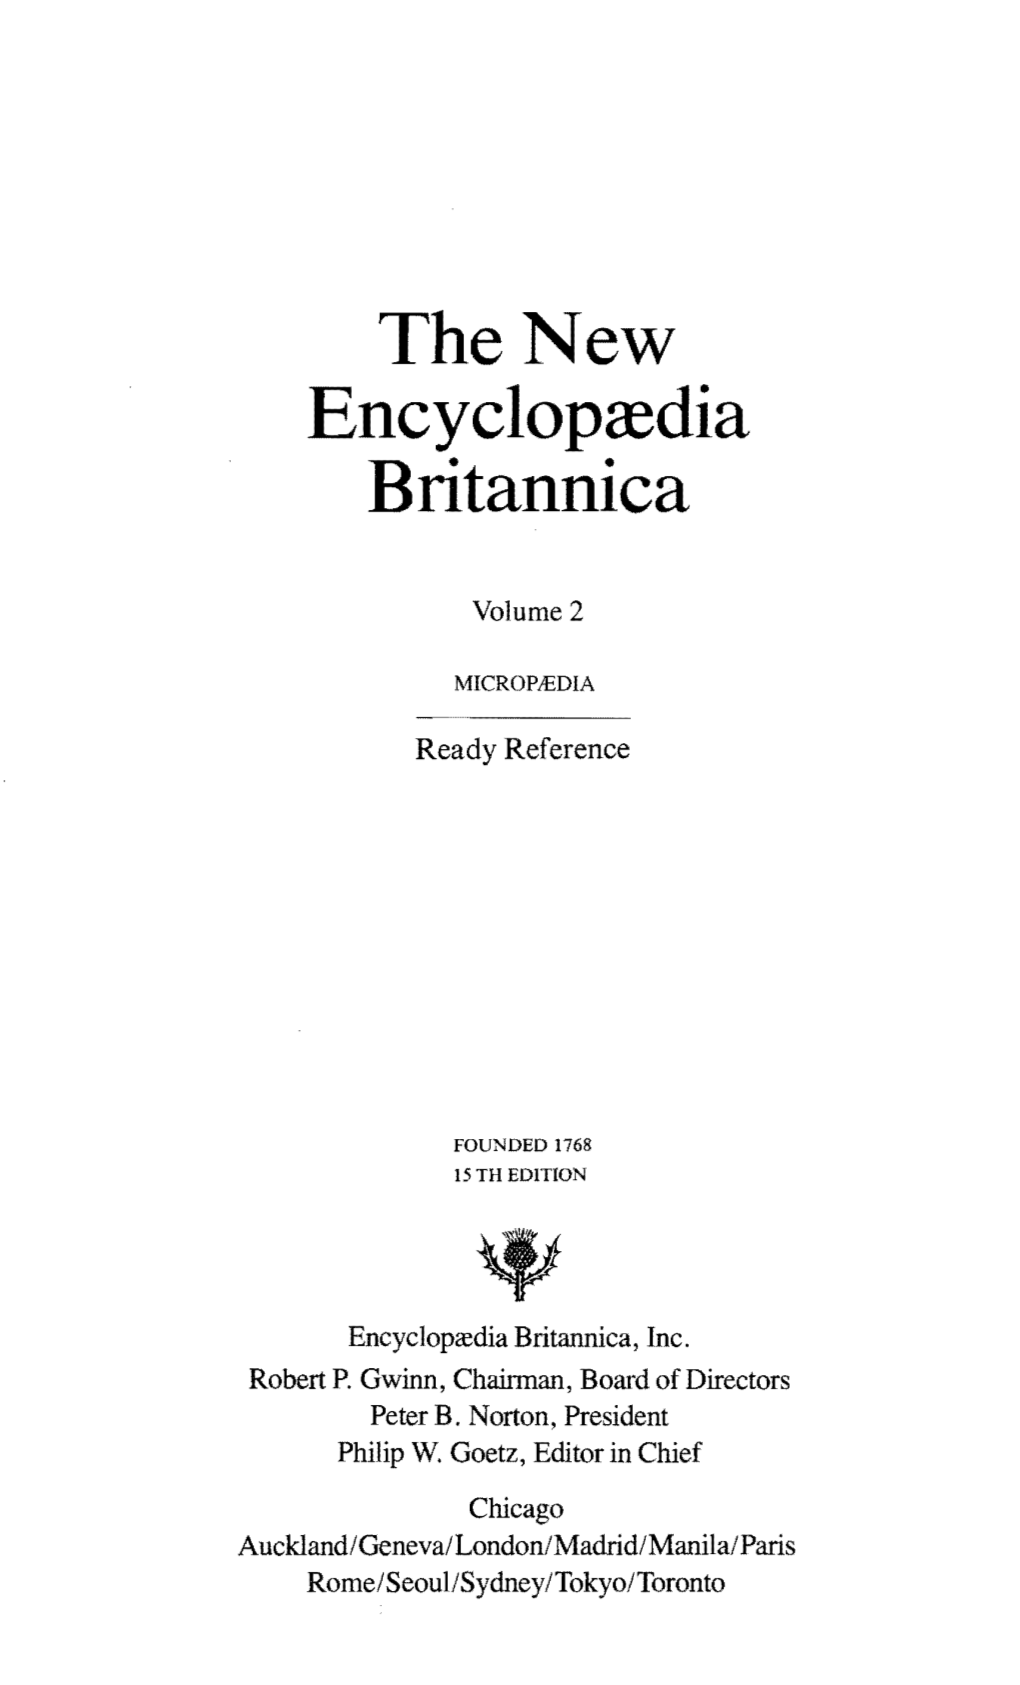 The New Encyclopredia Britannica